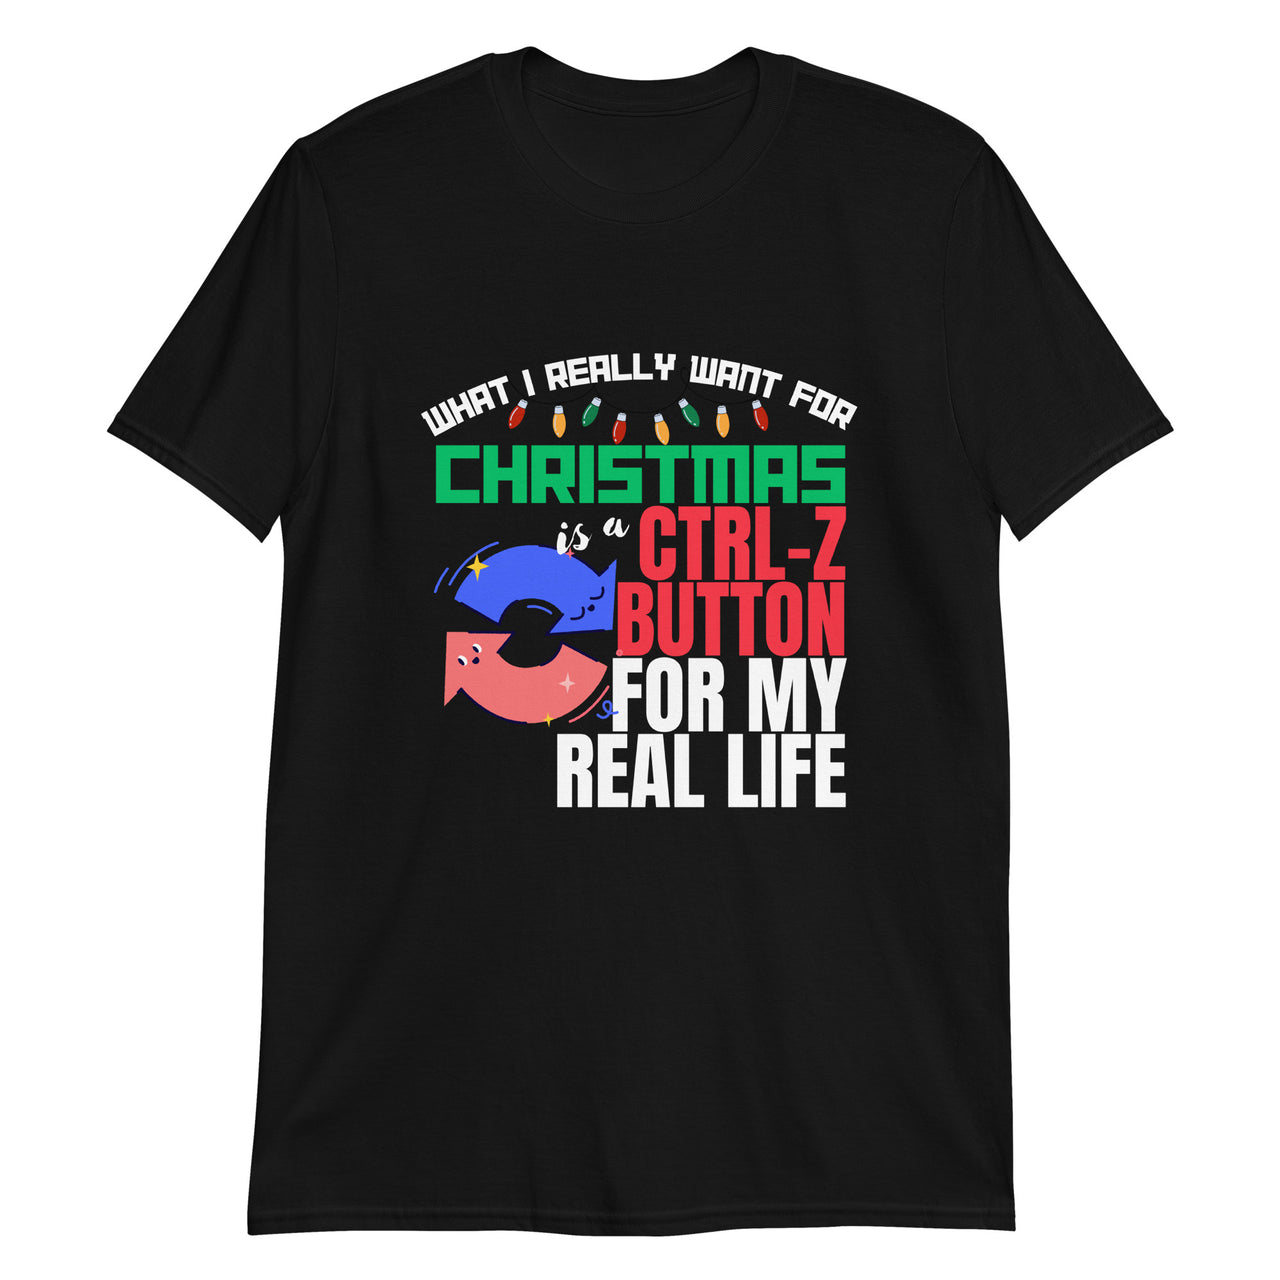 Christmas Laughs Control-Z Button Humor T-Shirt